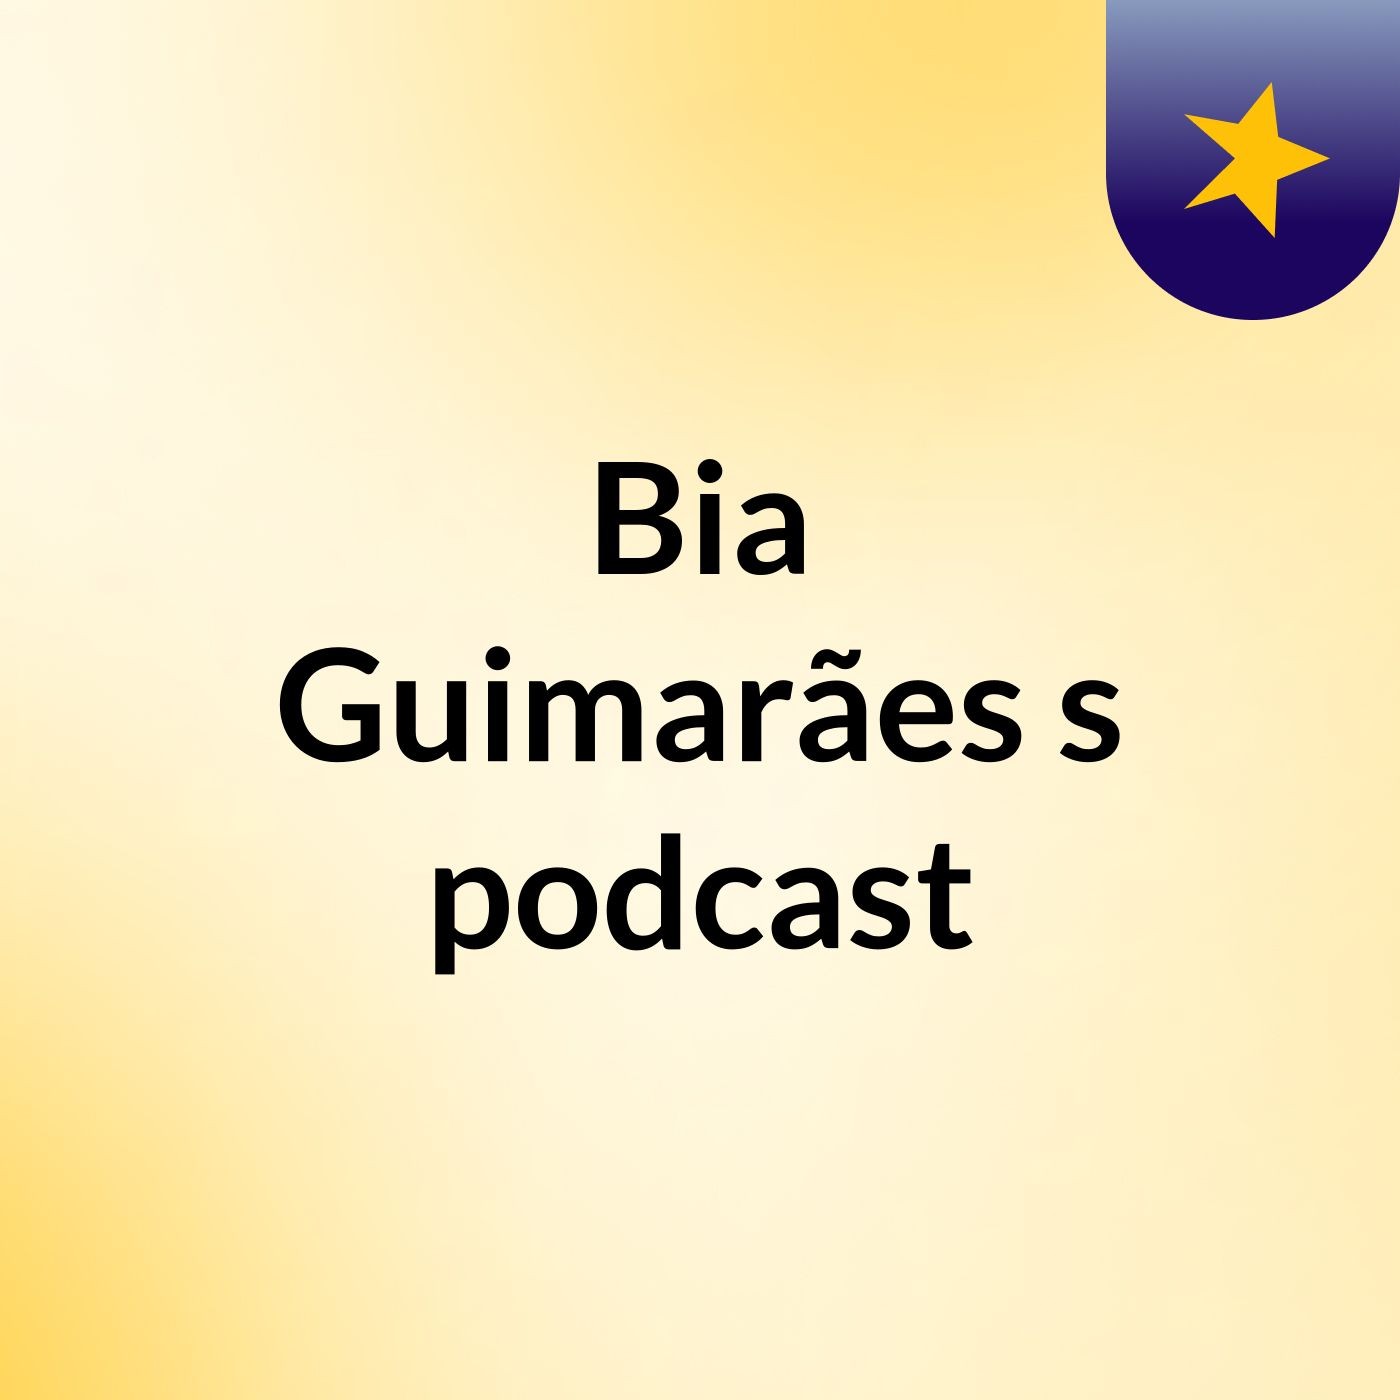 Bia Guimarães's podcast